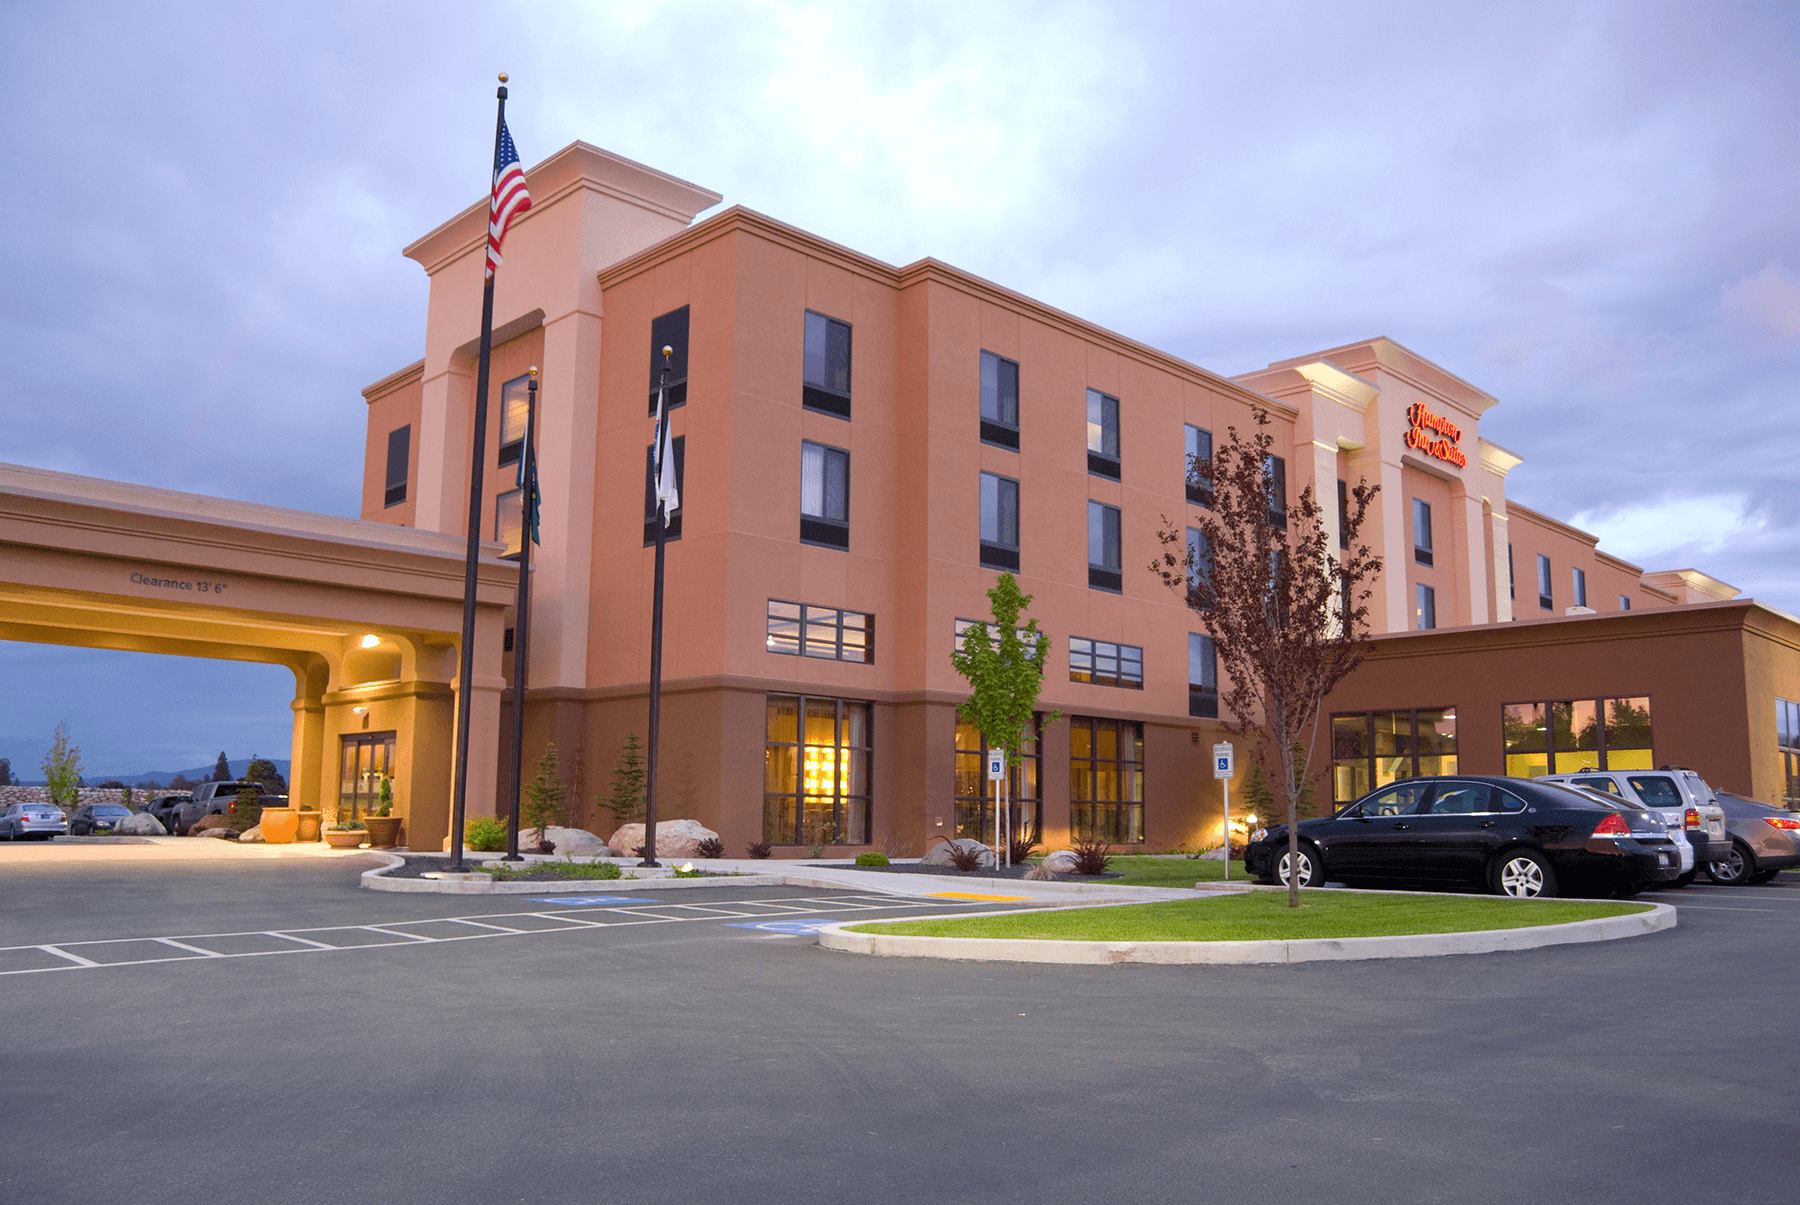  Hampton Inn and Suites Spokane exterior at dusk 